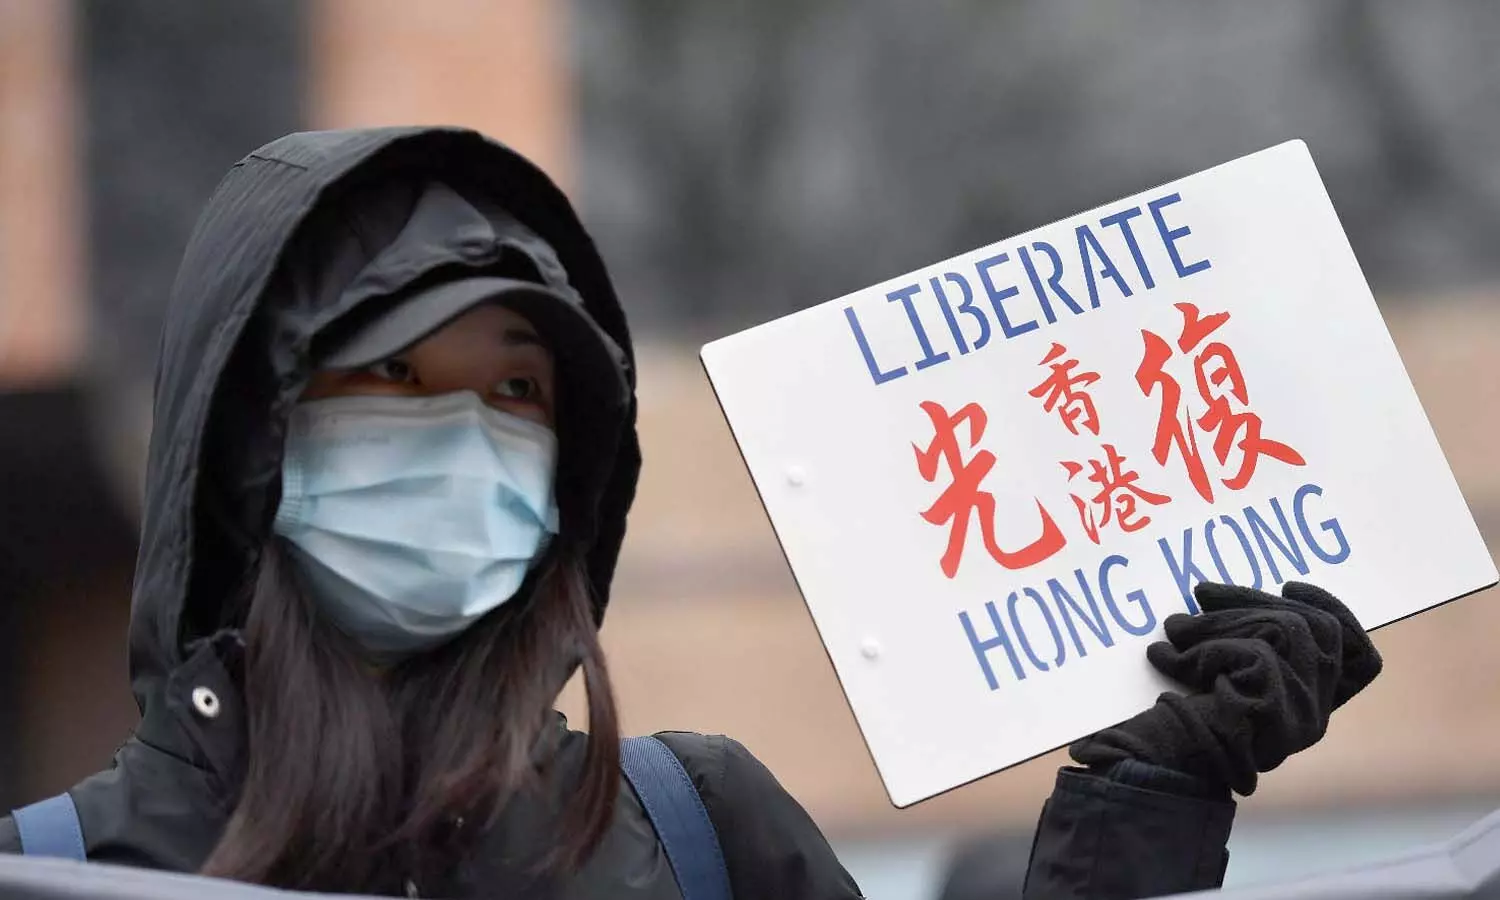 Hong Kong Media: Hong Kongs media ended, Chinas whip under the guise of security laws